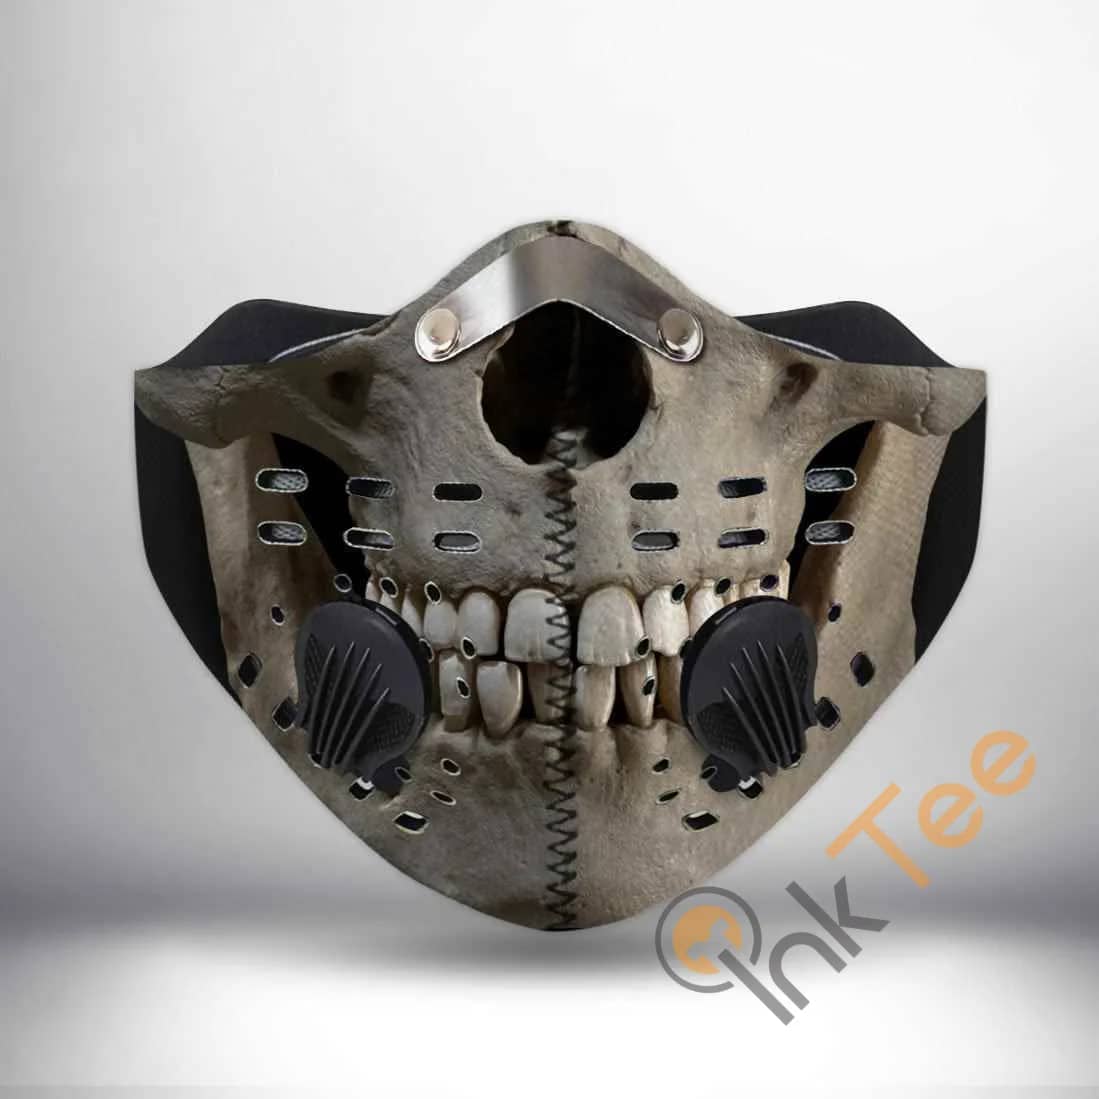 Skull Filter Activated Carbon Pm 2.5 Fm Sku 522 Face Mask